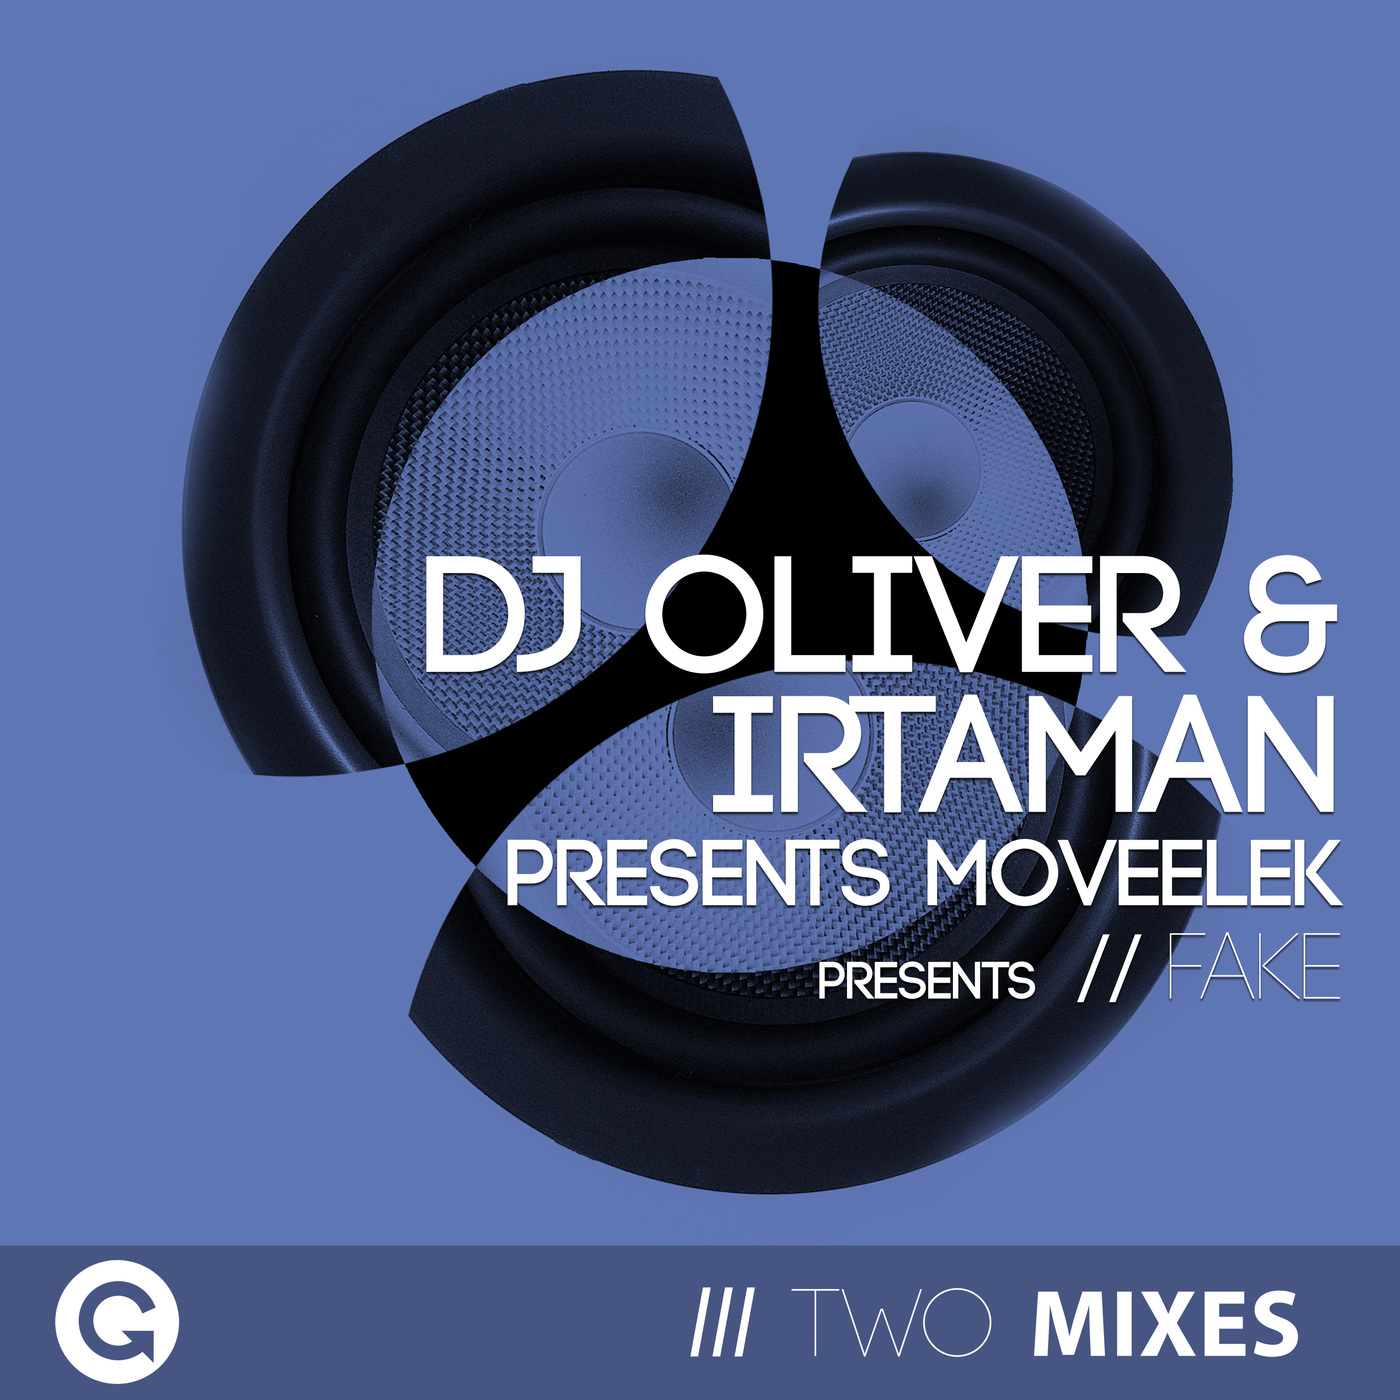 DJ Oliver & Iratman present MOVEELEK - Atlantica / GRAND Music